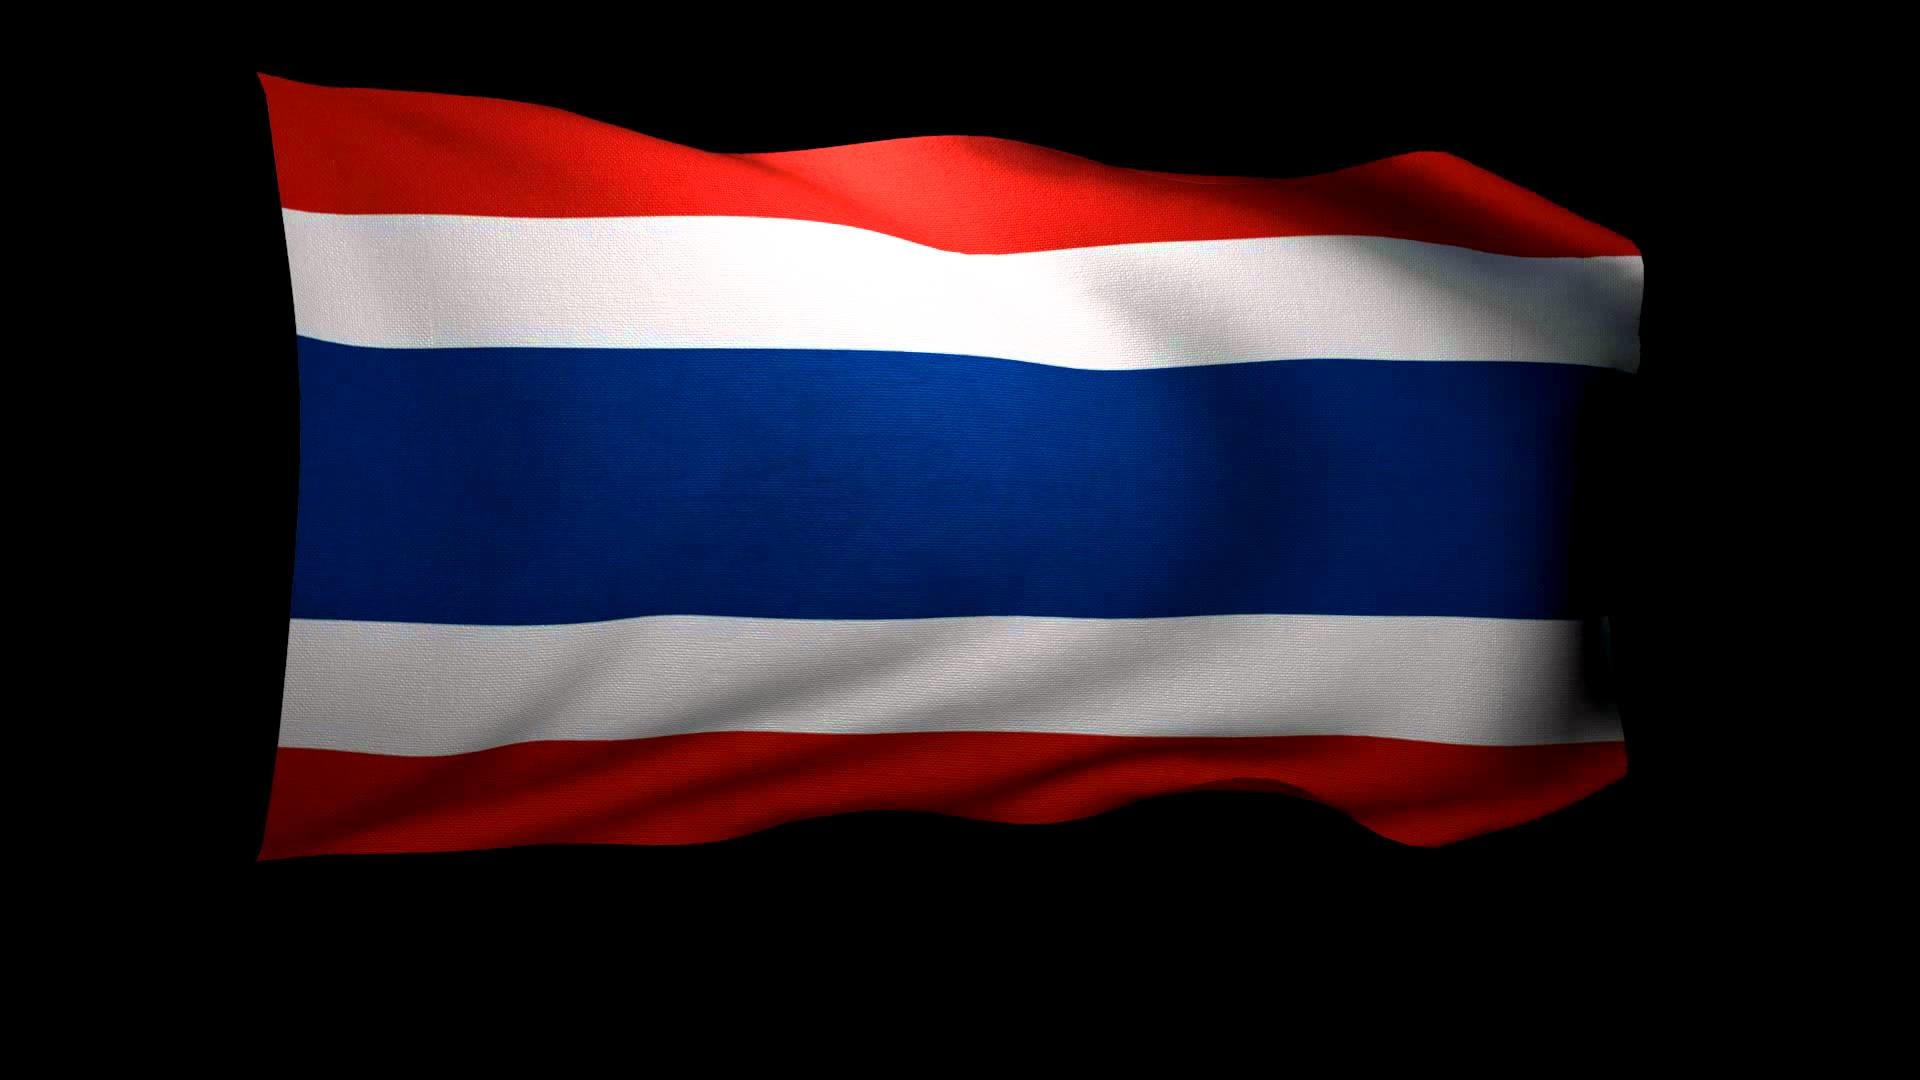 1920x1080 Thailand Flag Waving Photo HD Desktop Wallpaper, Background Image